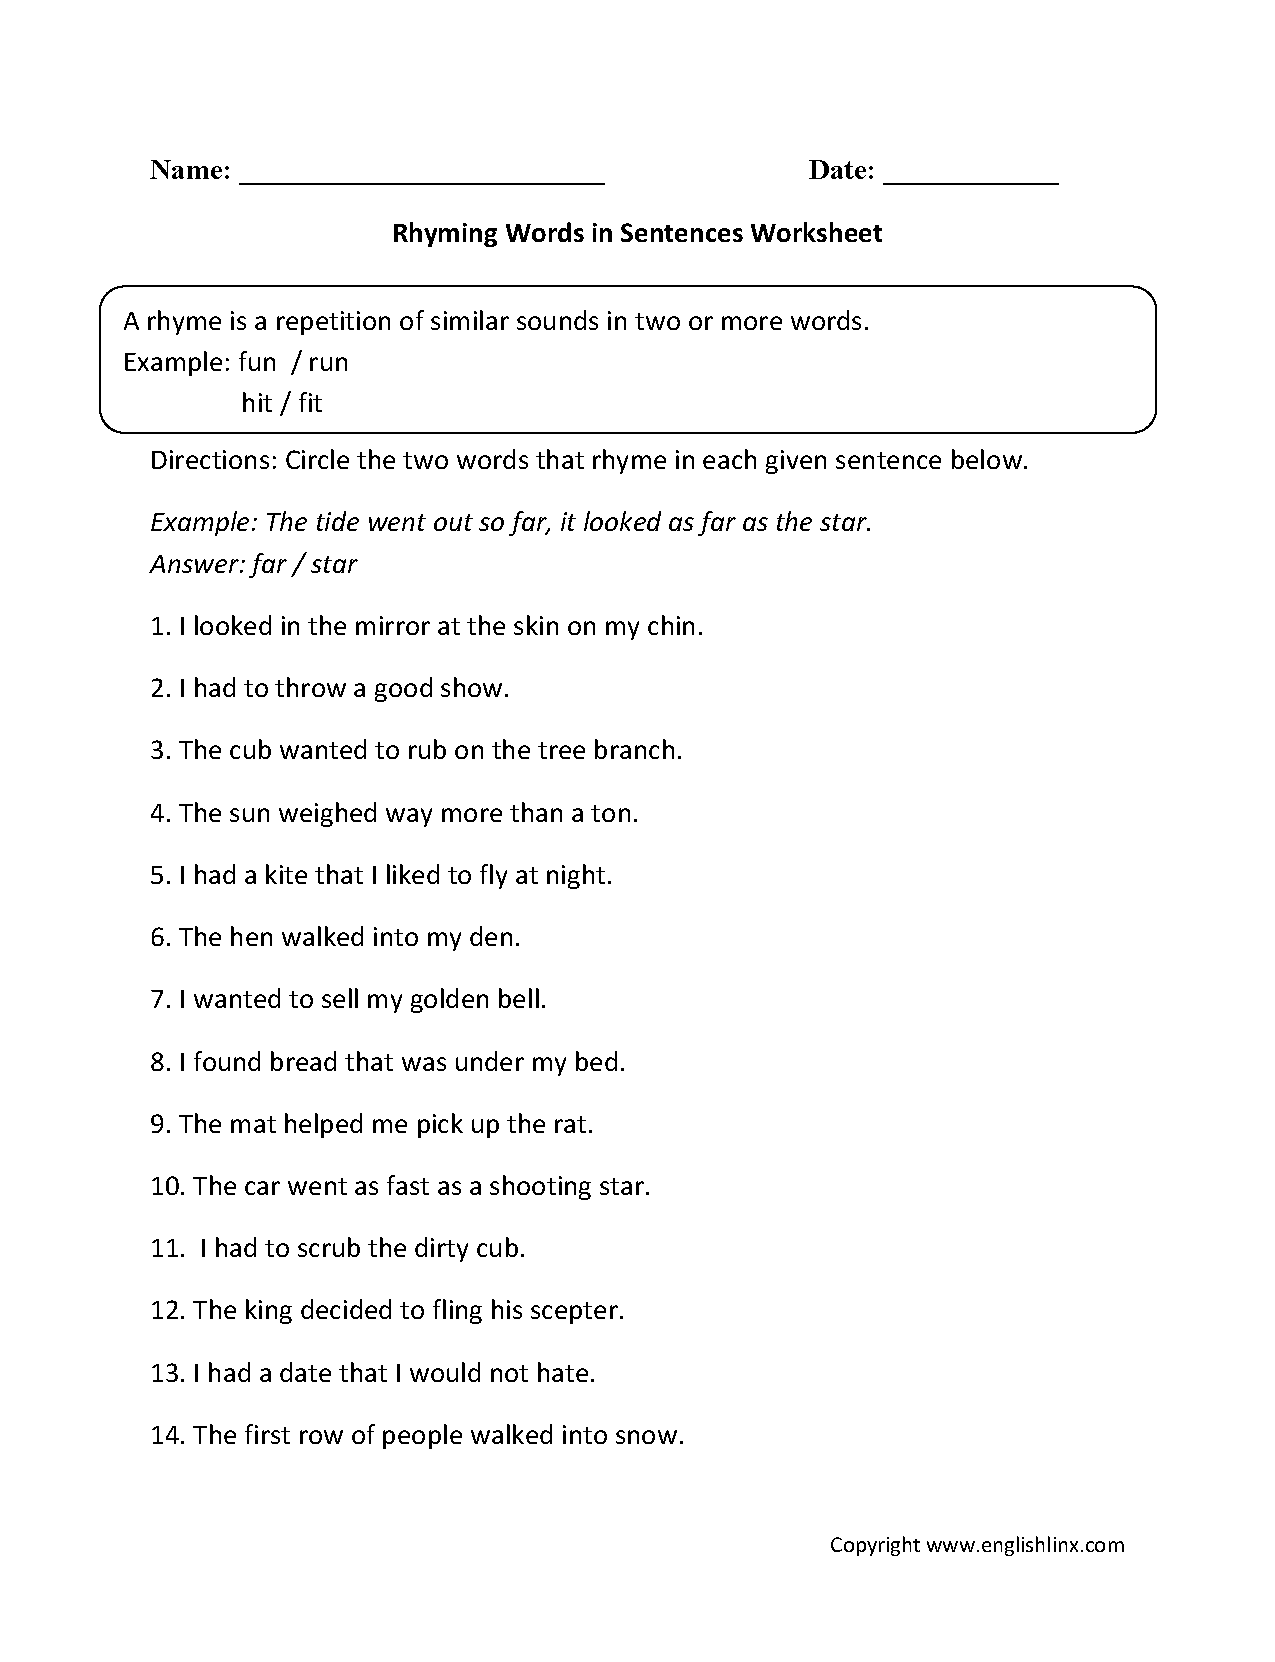 Rhyming Words Worksheet For 2nd Grade